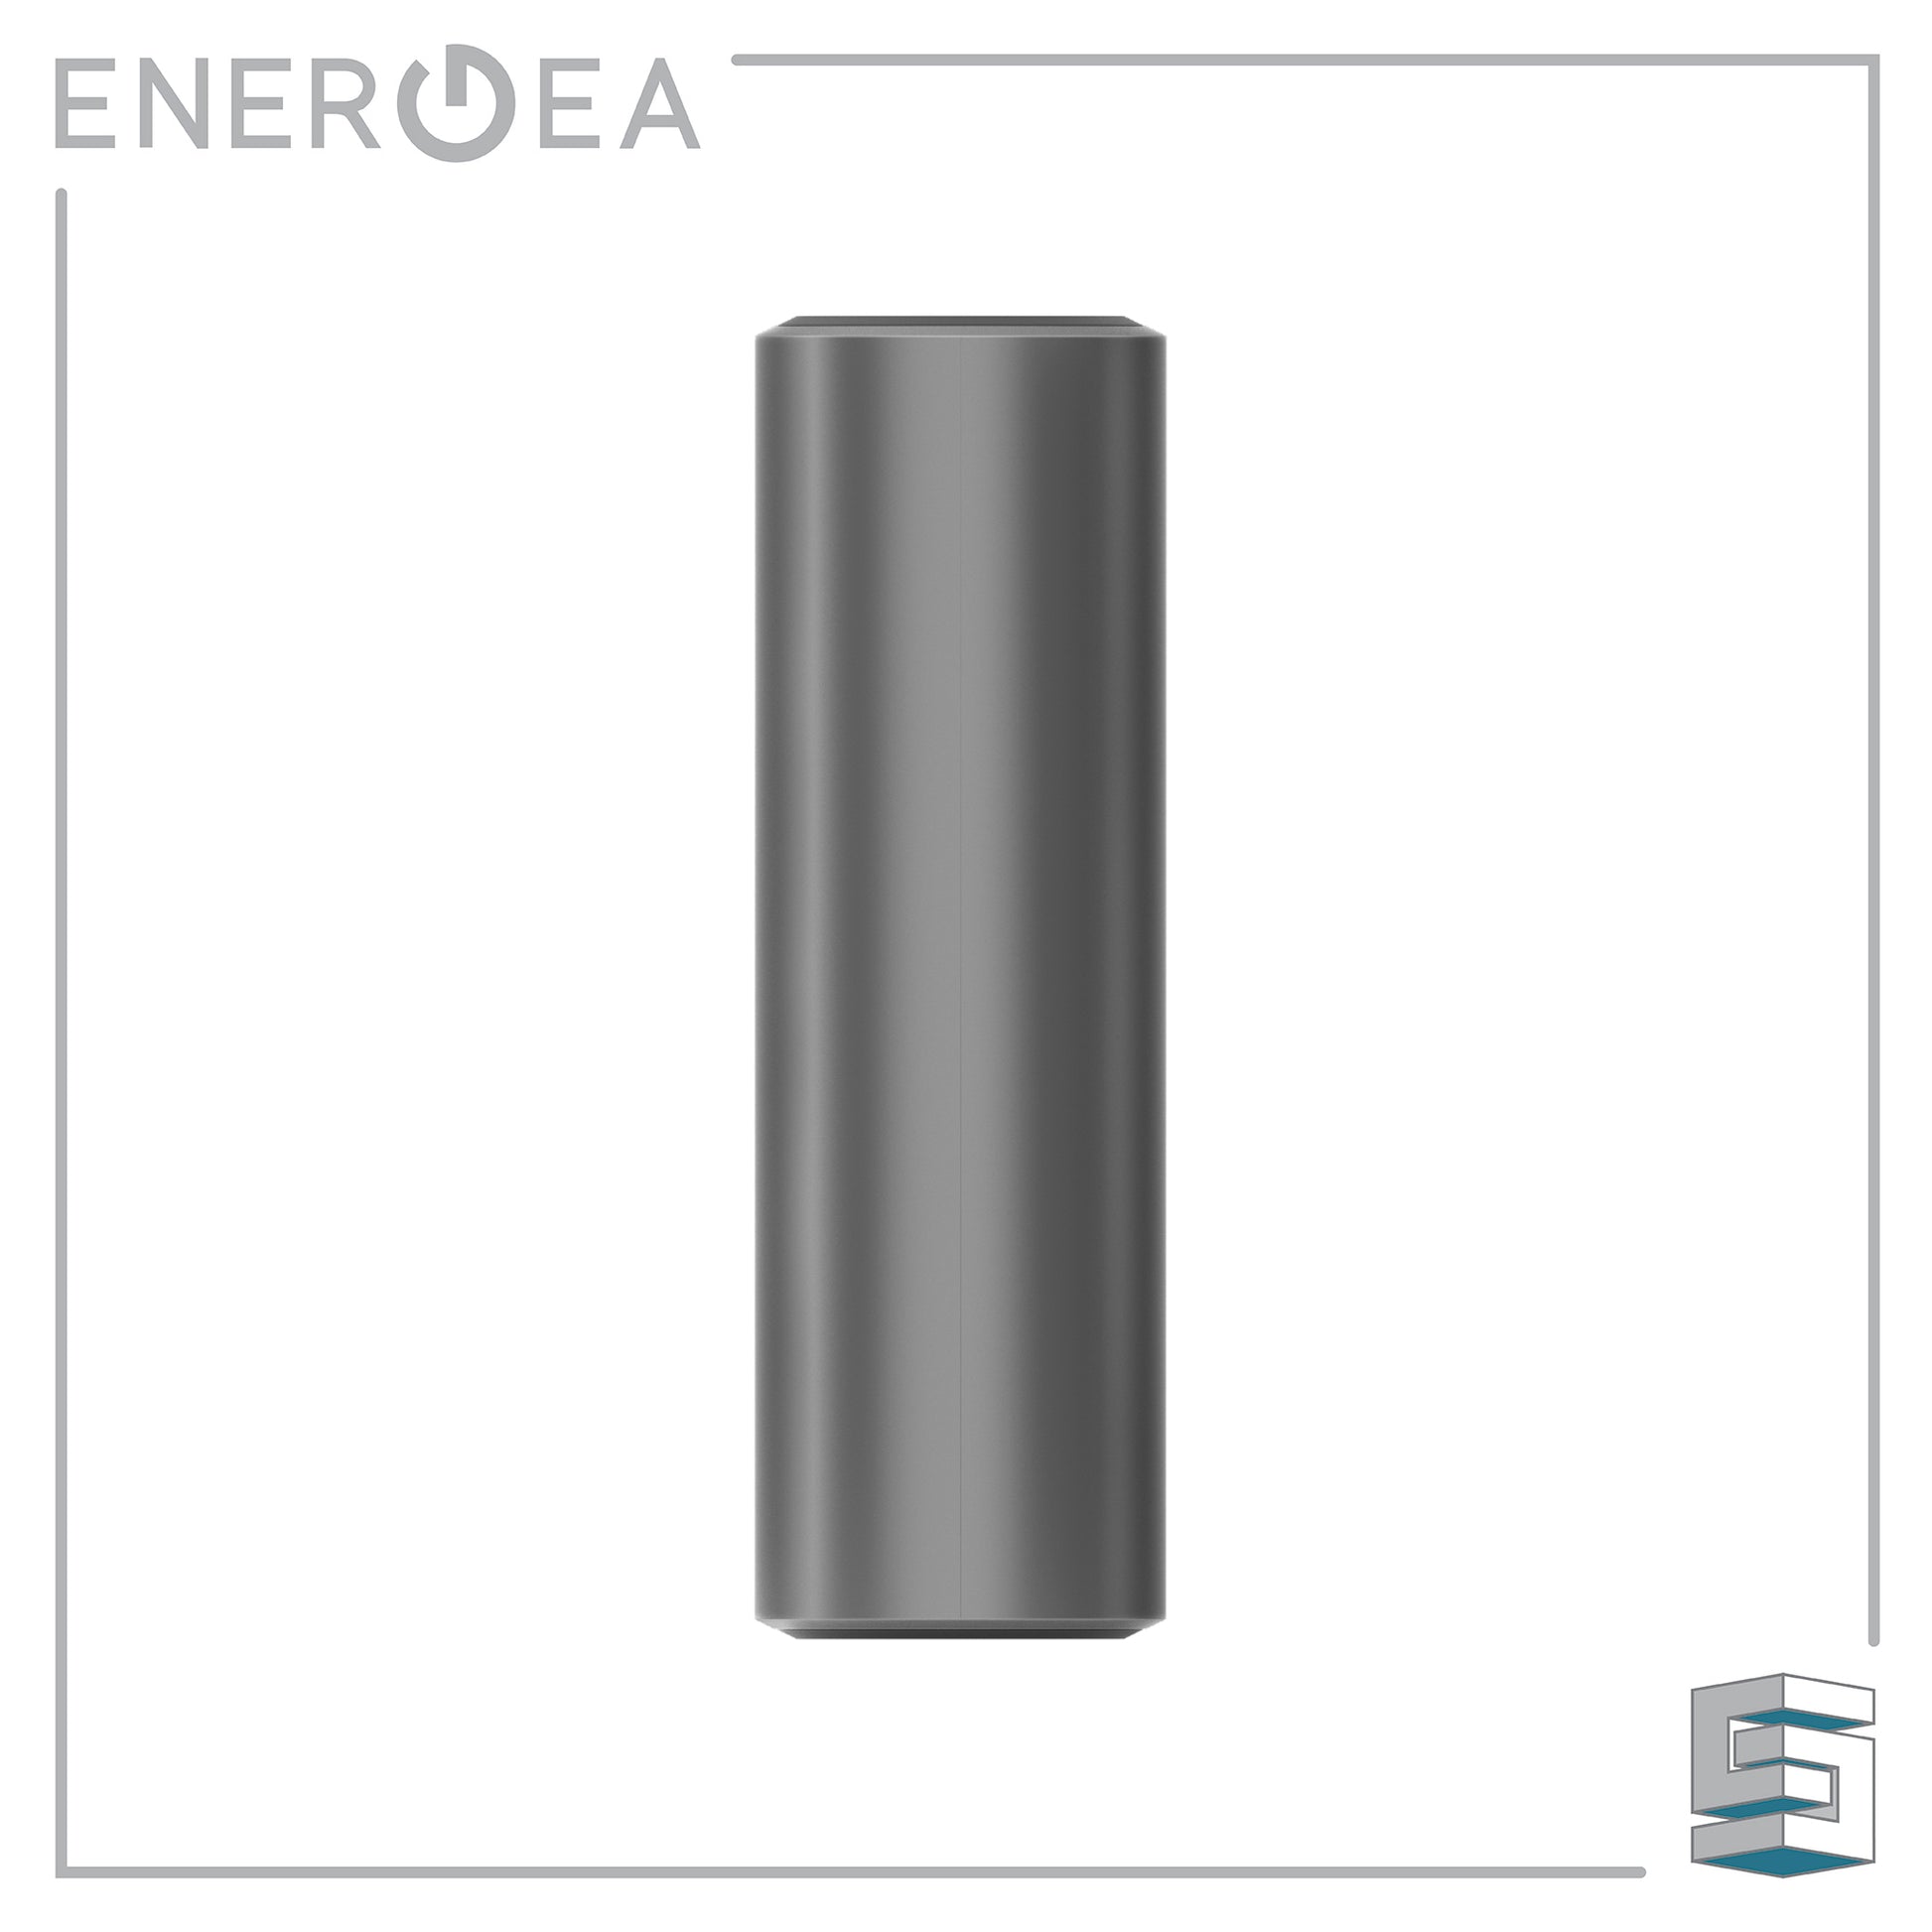 Power Bank 10000mAh - ENERGEA ComPac 35 Global Synergy Concepts